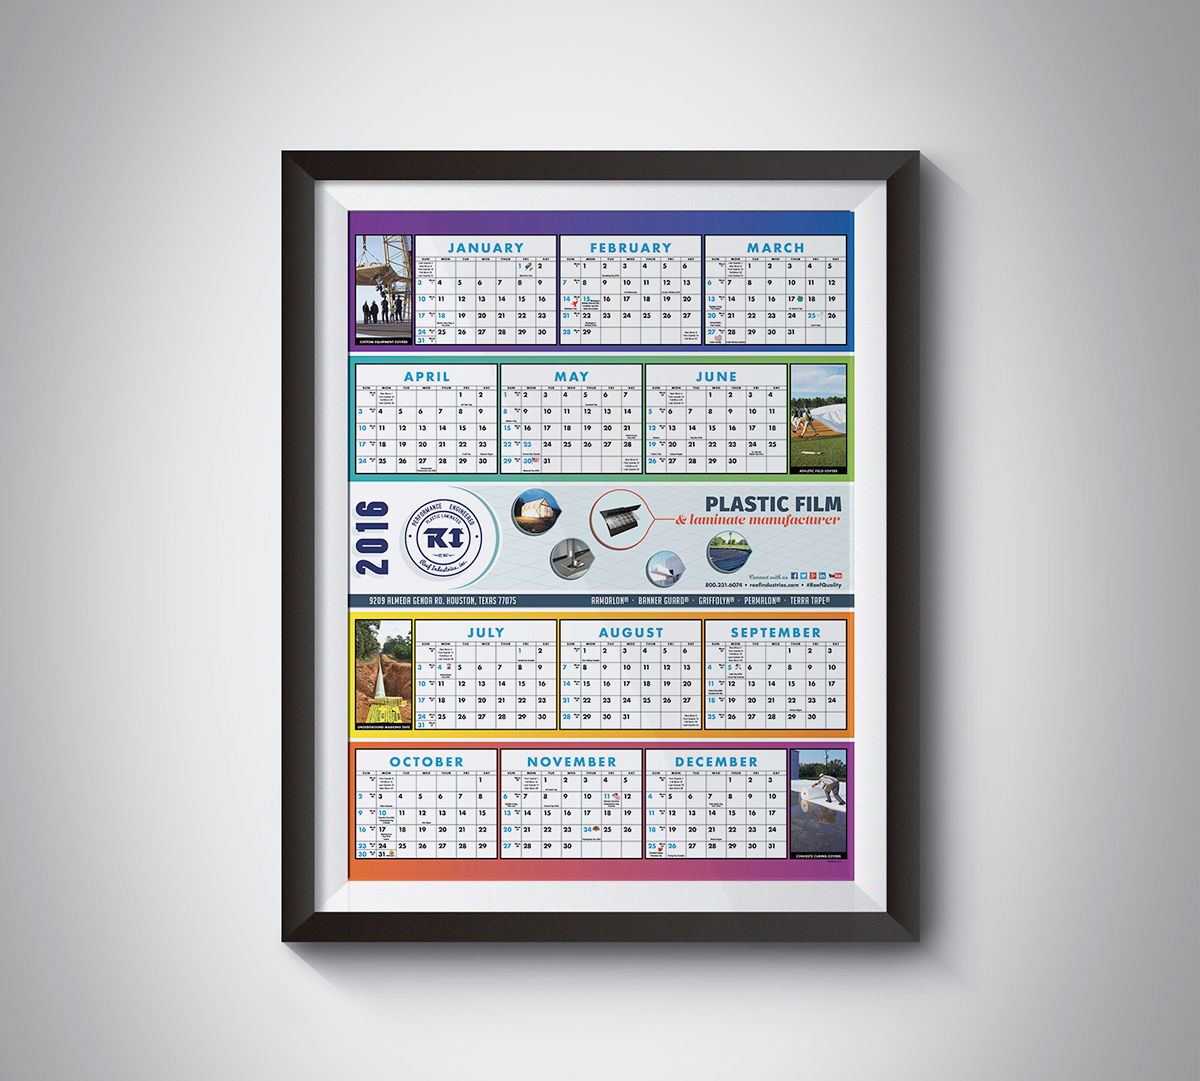 2016 Calendar reef industries month year plastic film wall calendar